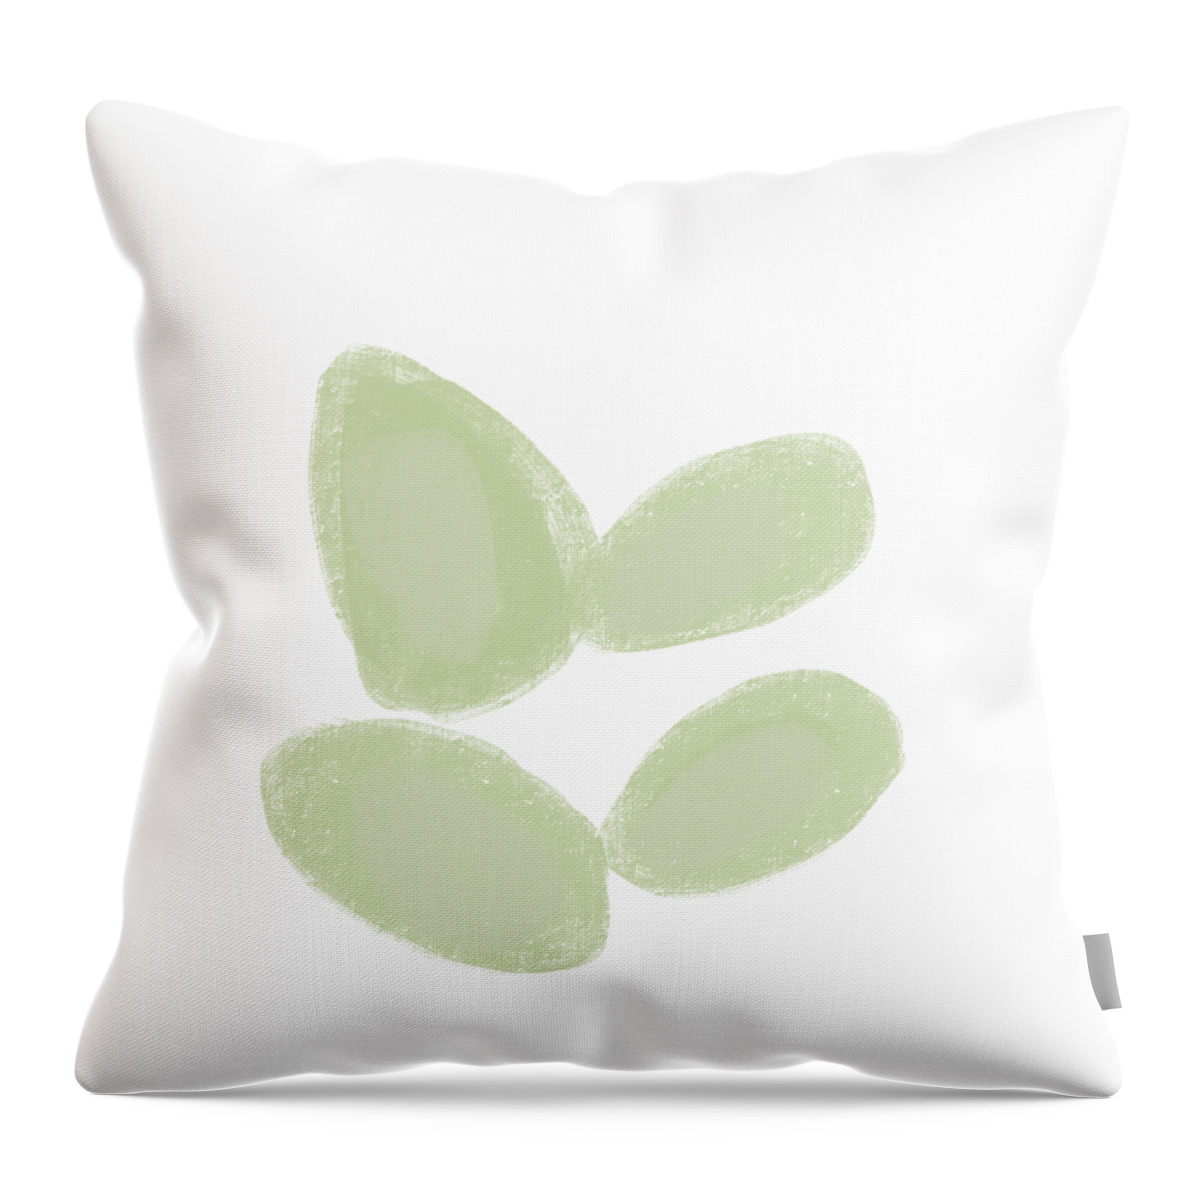 Tea Green Throw Pillow featuring the digital art Fenna 3 - Minimal, Modern - Contemporary Abstract Painting - Tea Green by Studio Grafiikka